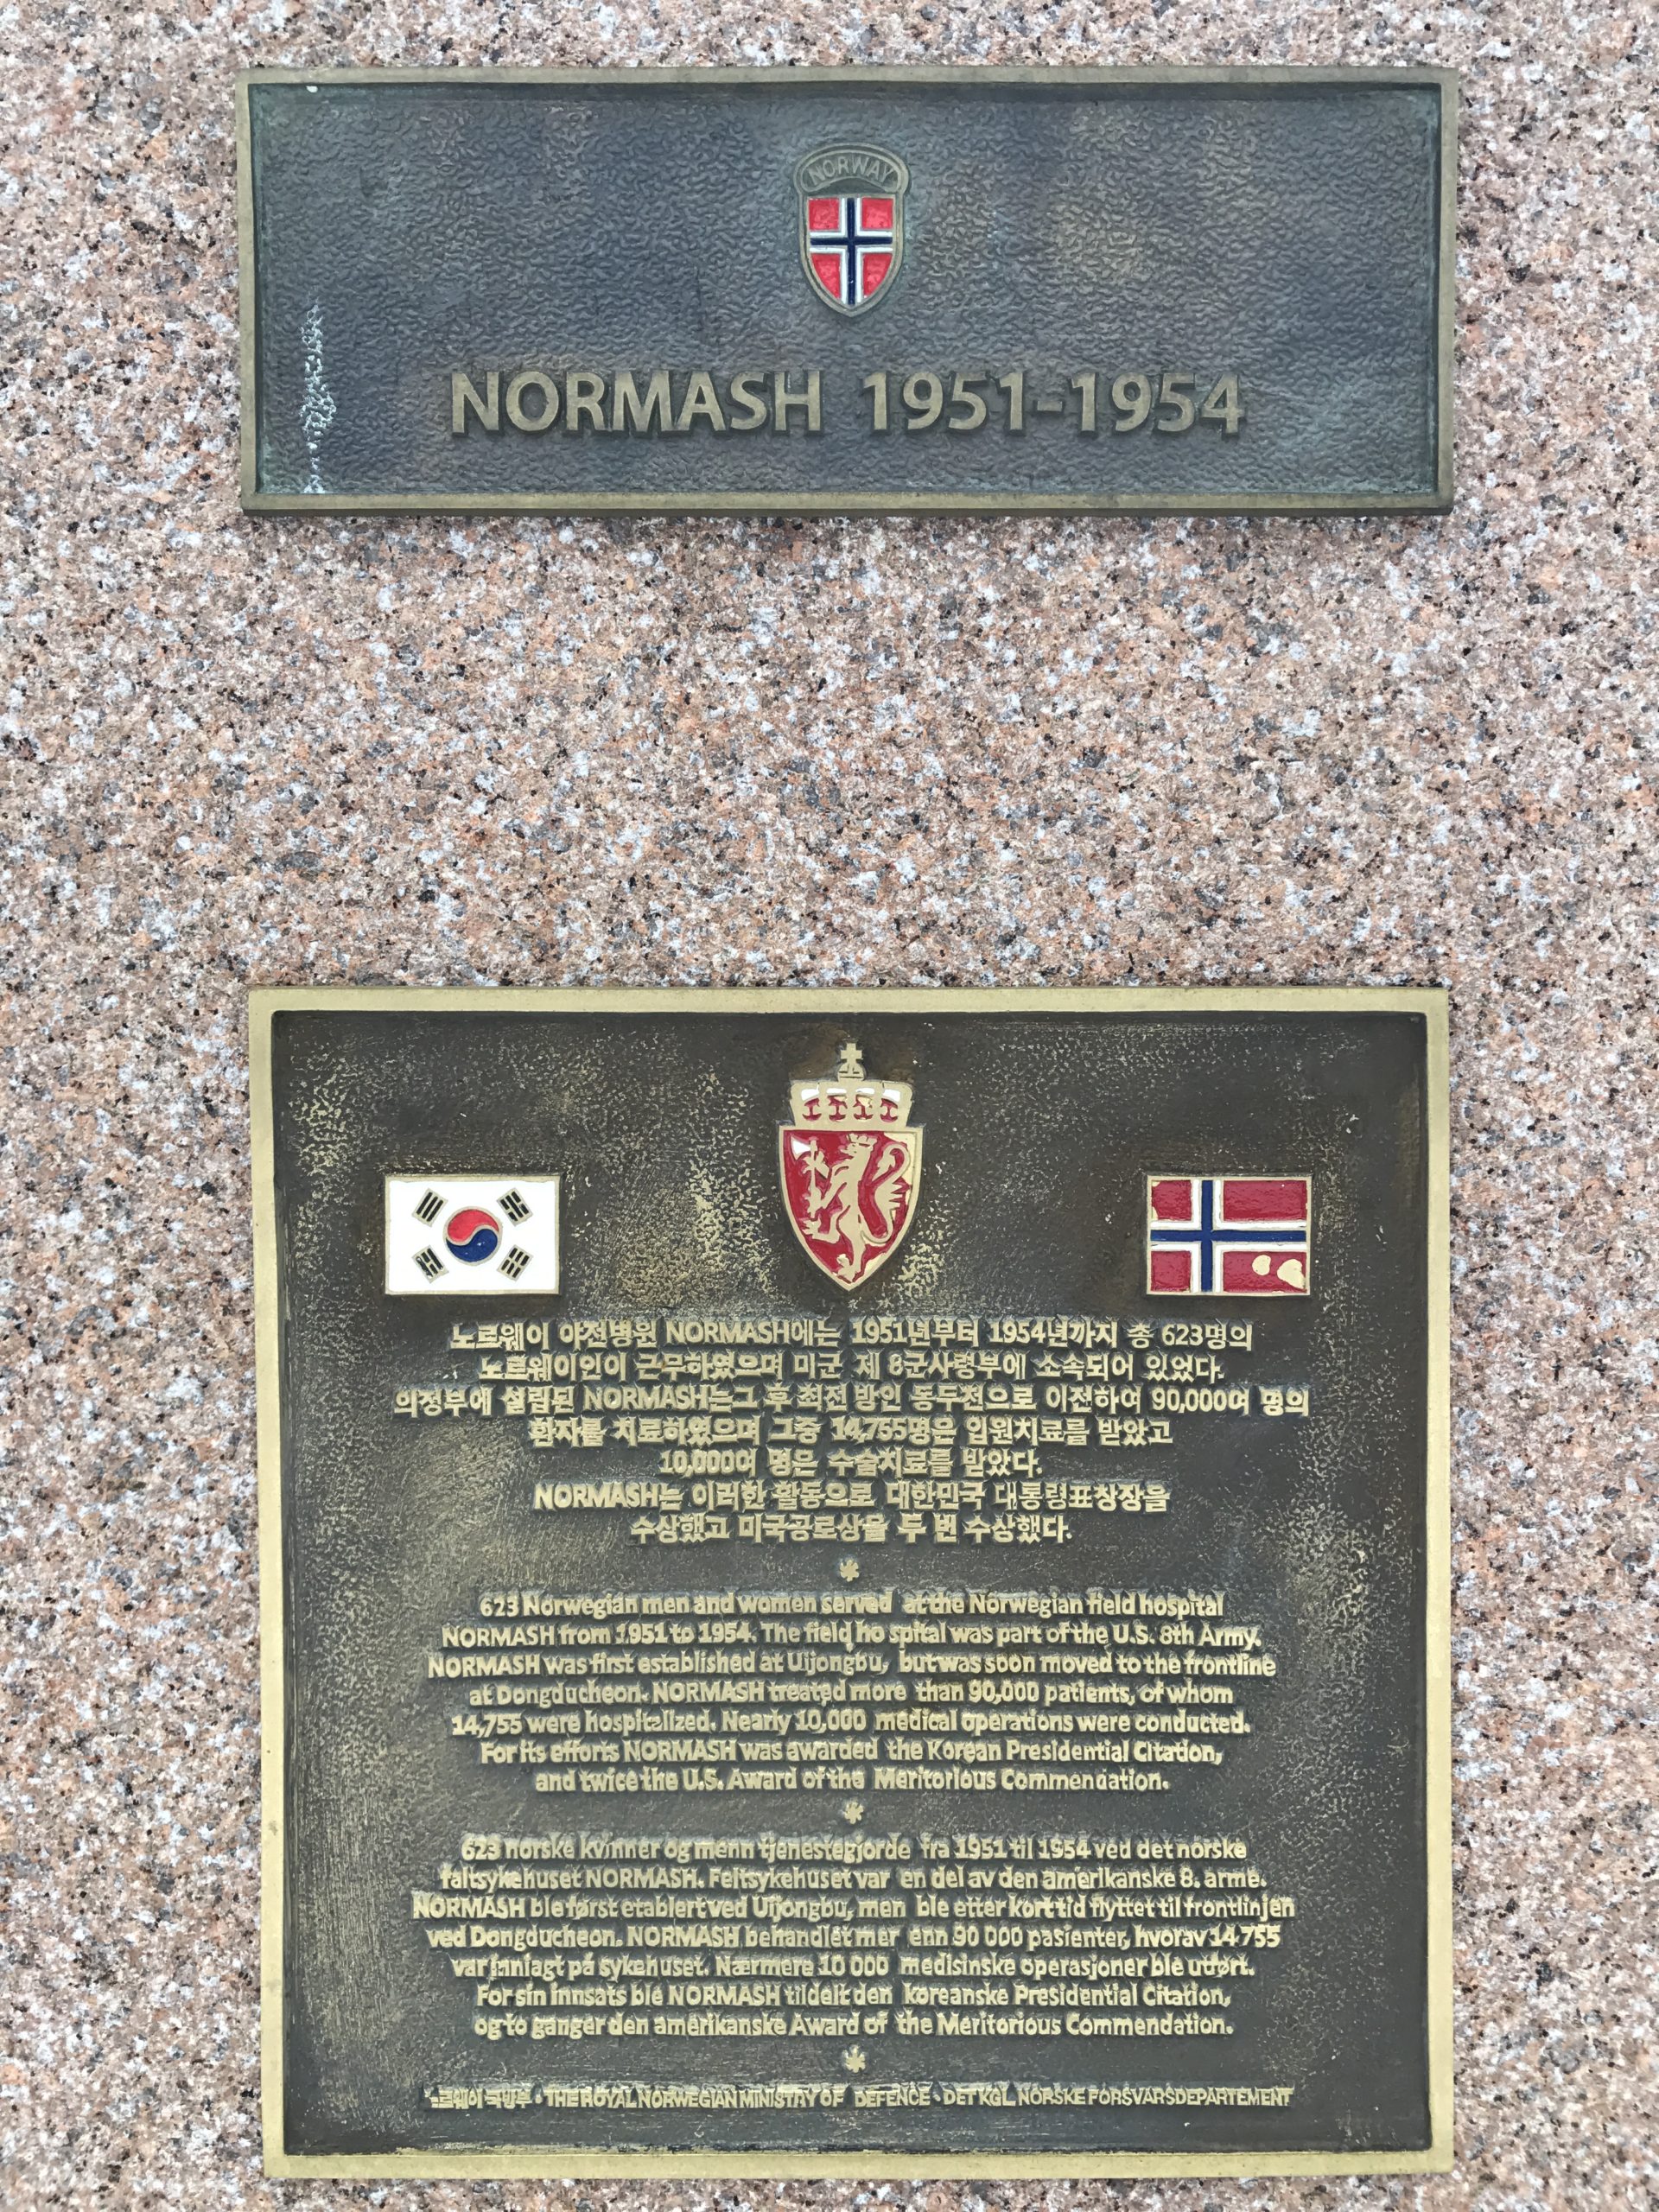 Korean War Memorials - Oslo - Norway